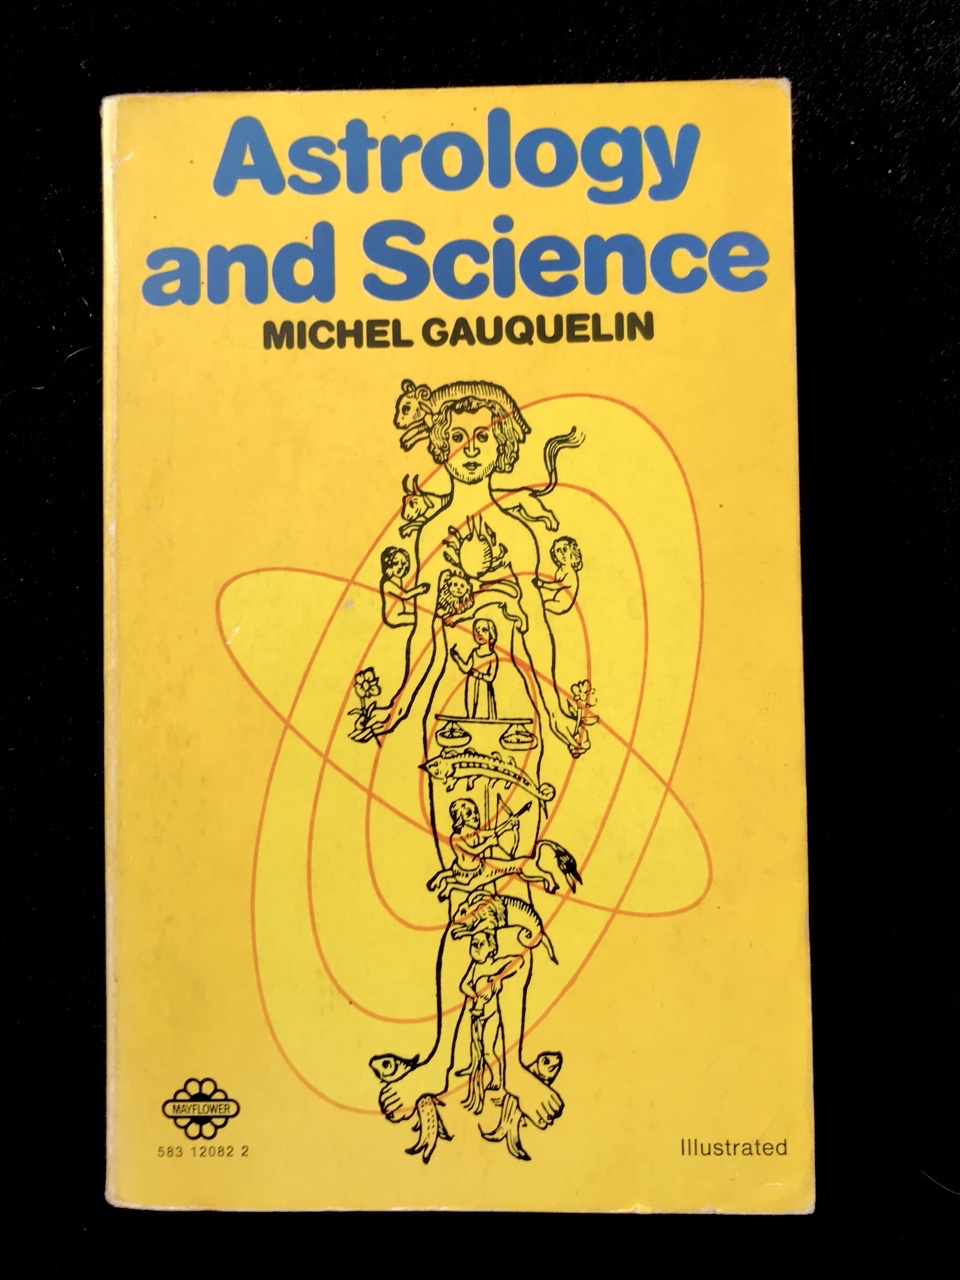 Astrology & Science by Michel Gauquelin